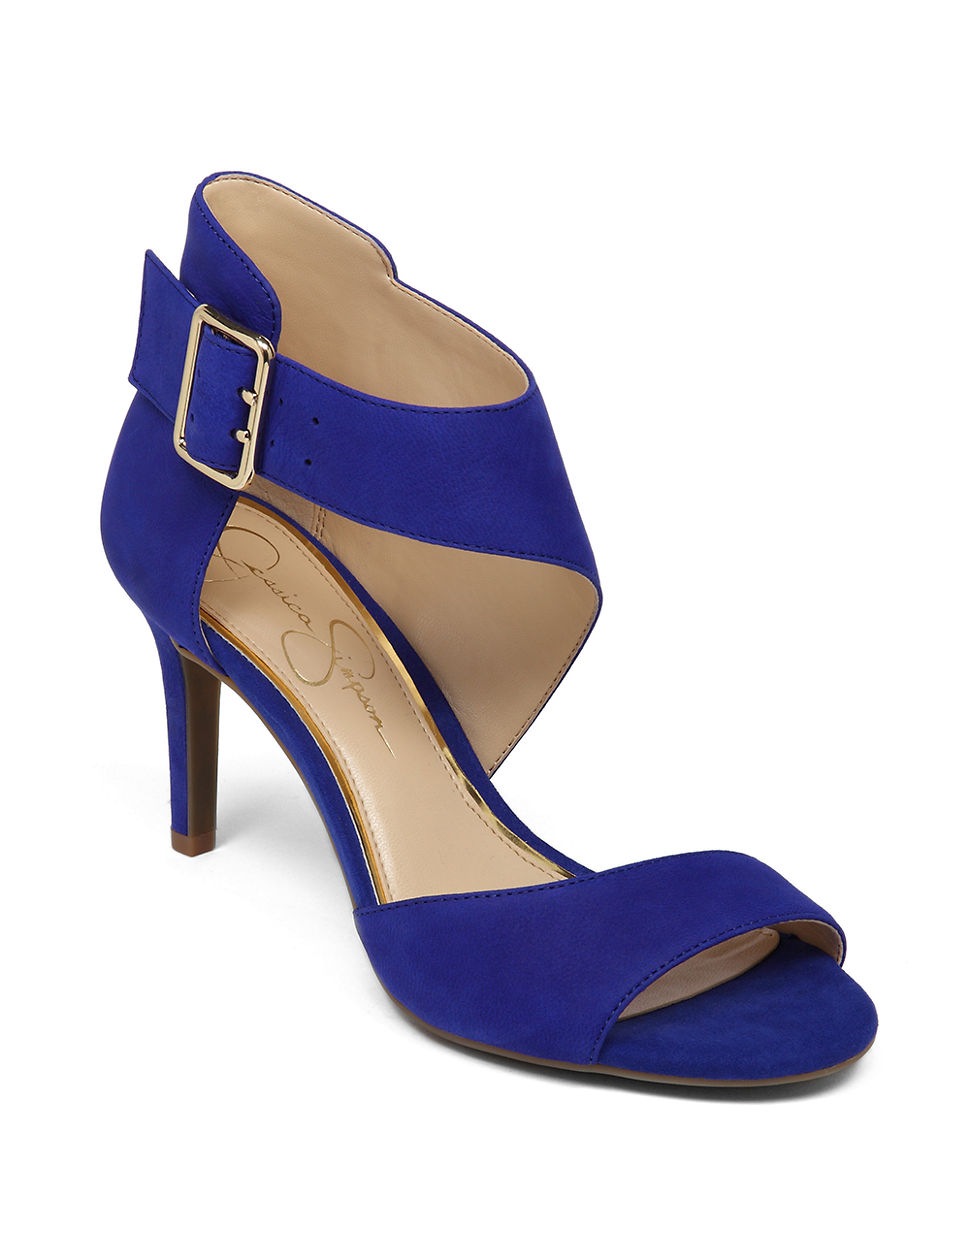 Jessica Simpson Marrionn Leather Sandal Heels in Blue | Lyst